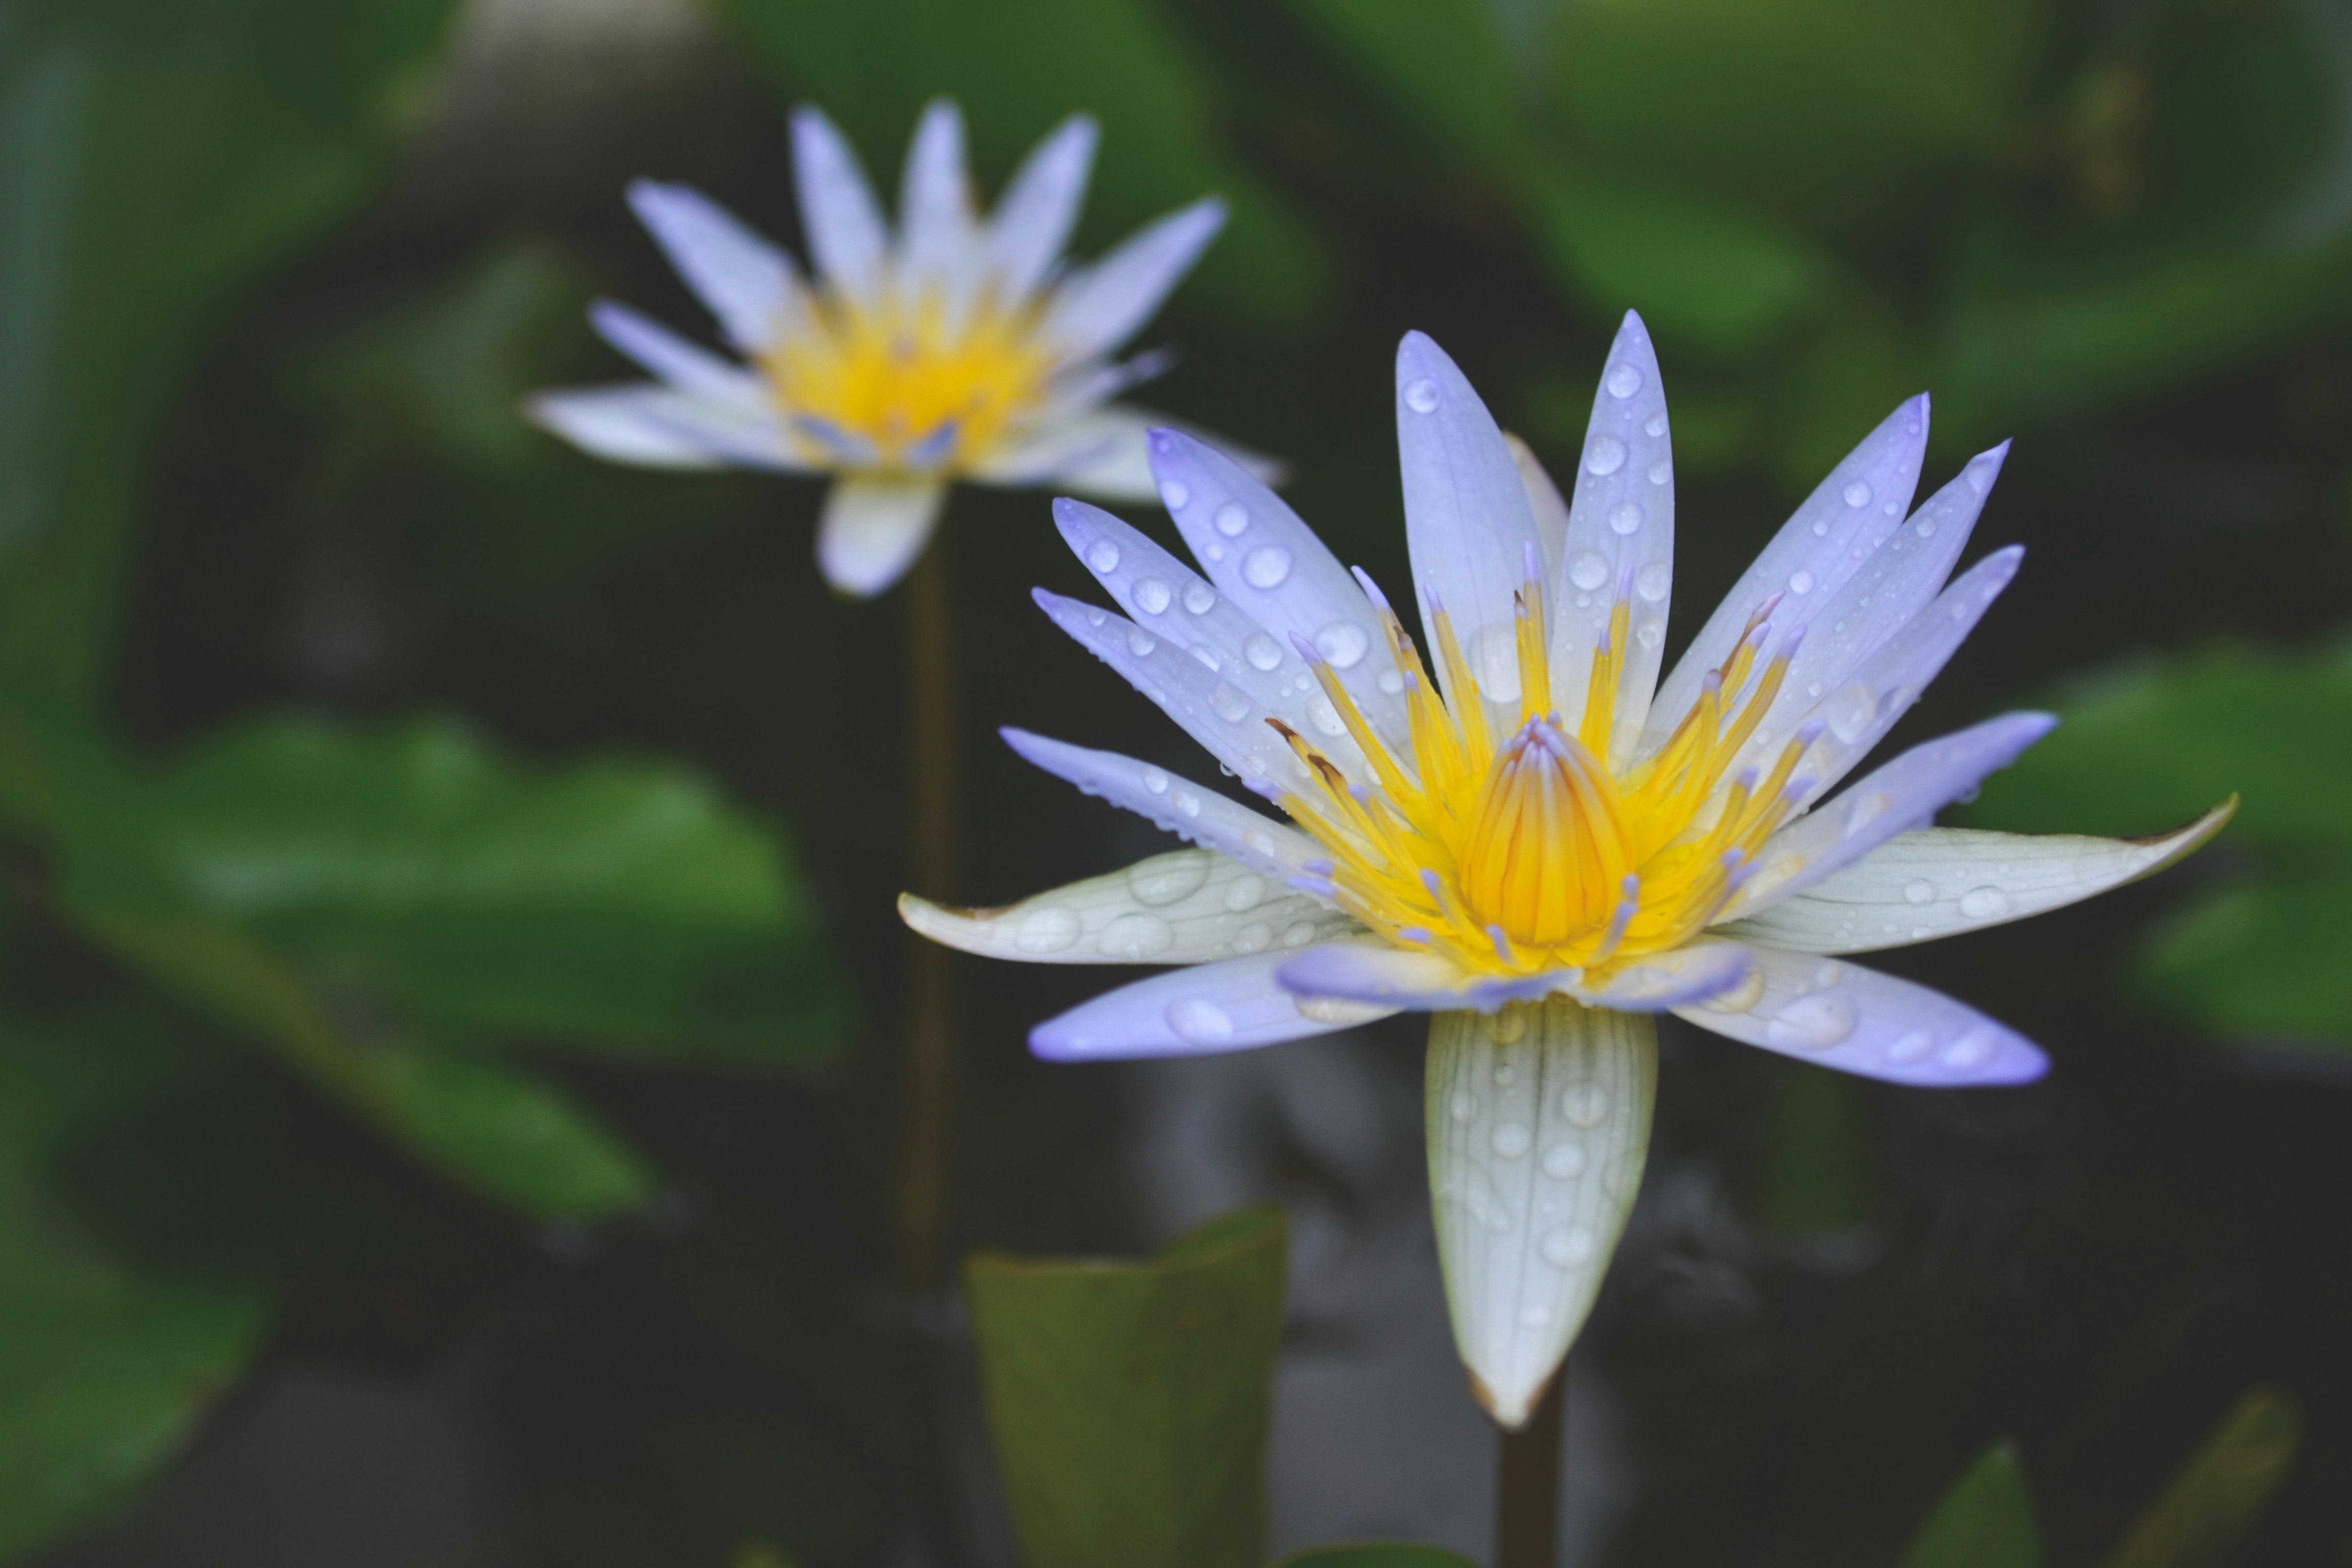 white and yellow lotus flower